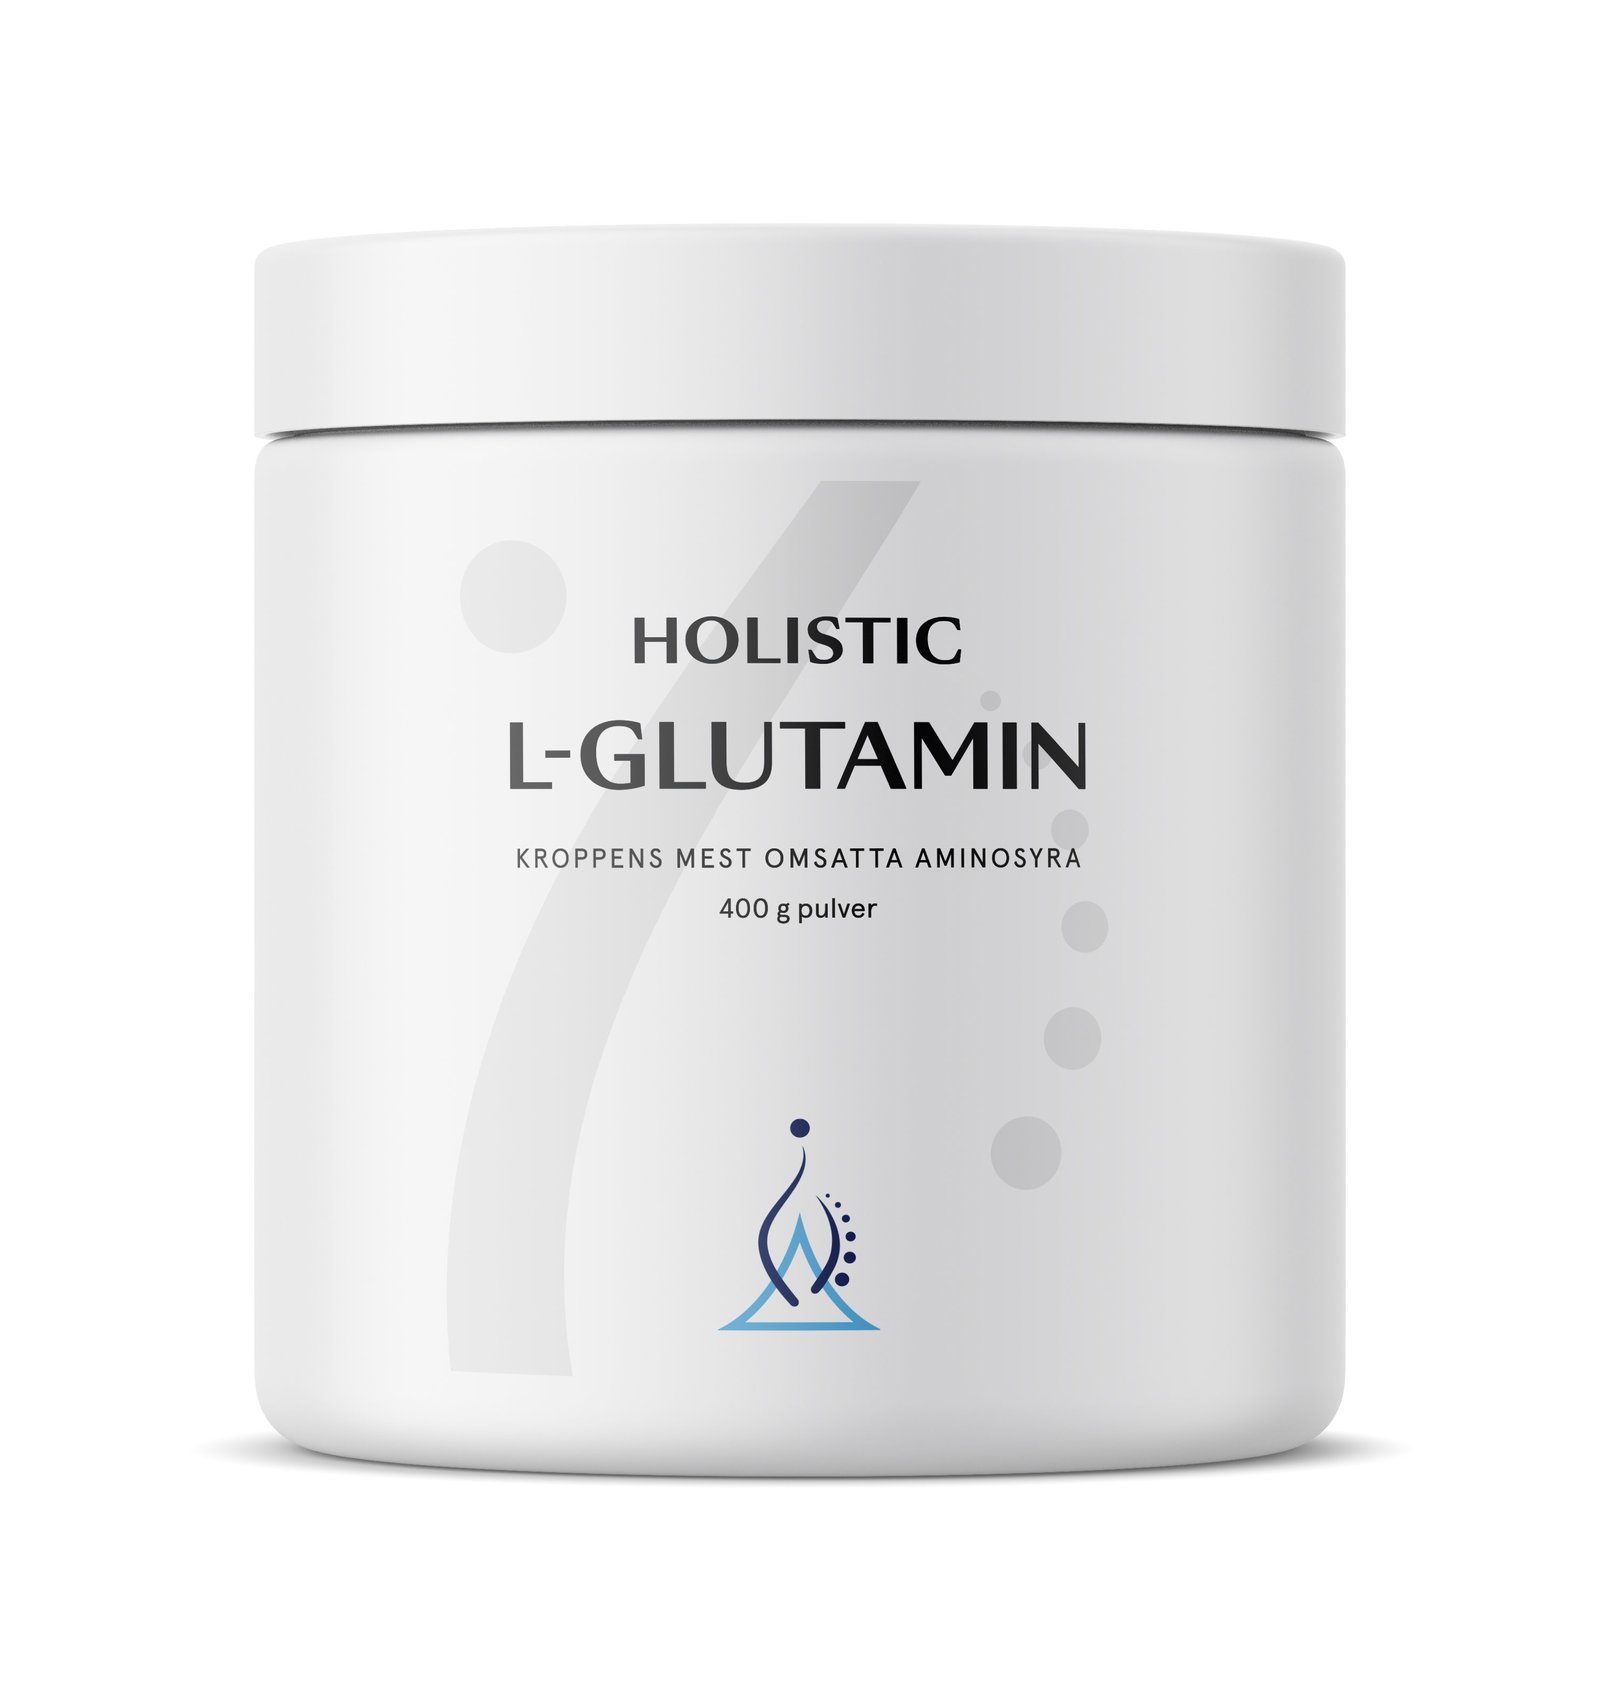 Holistic L-glutamin 400g